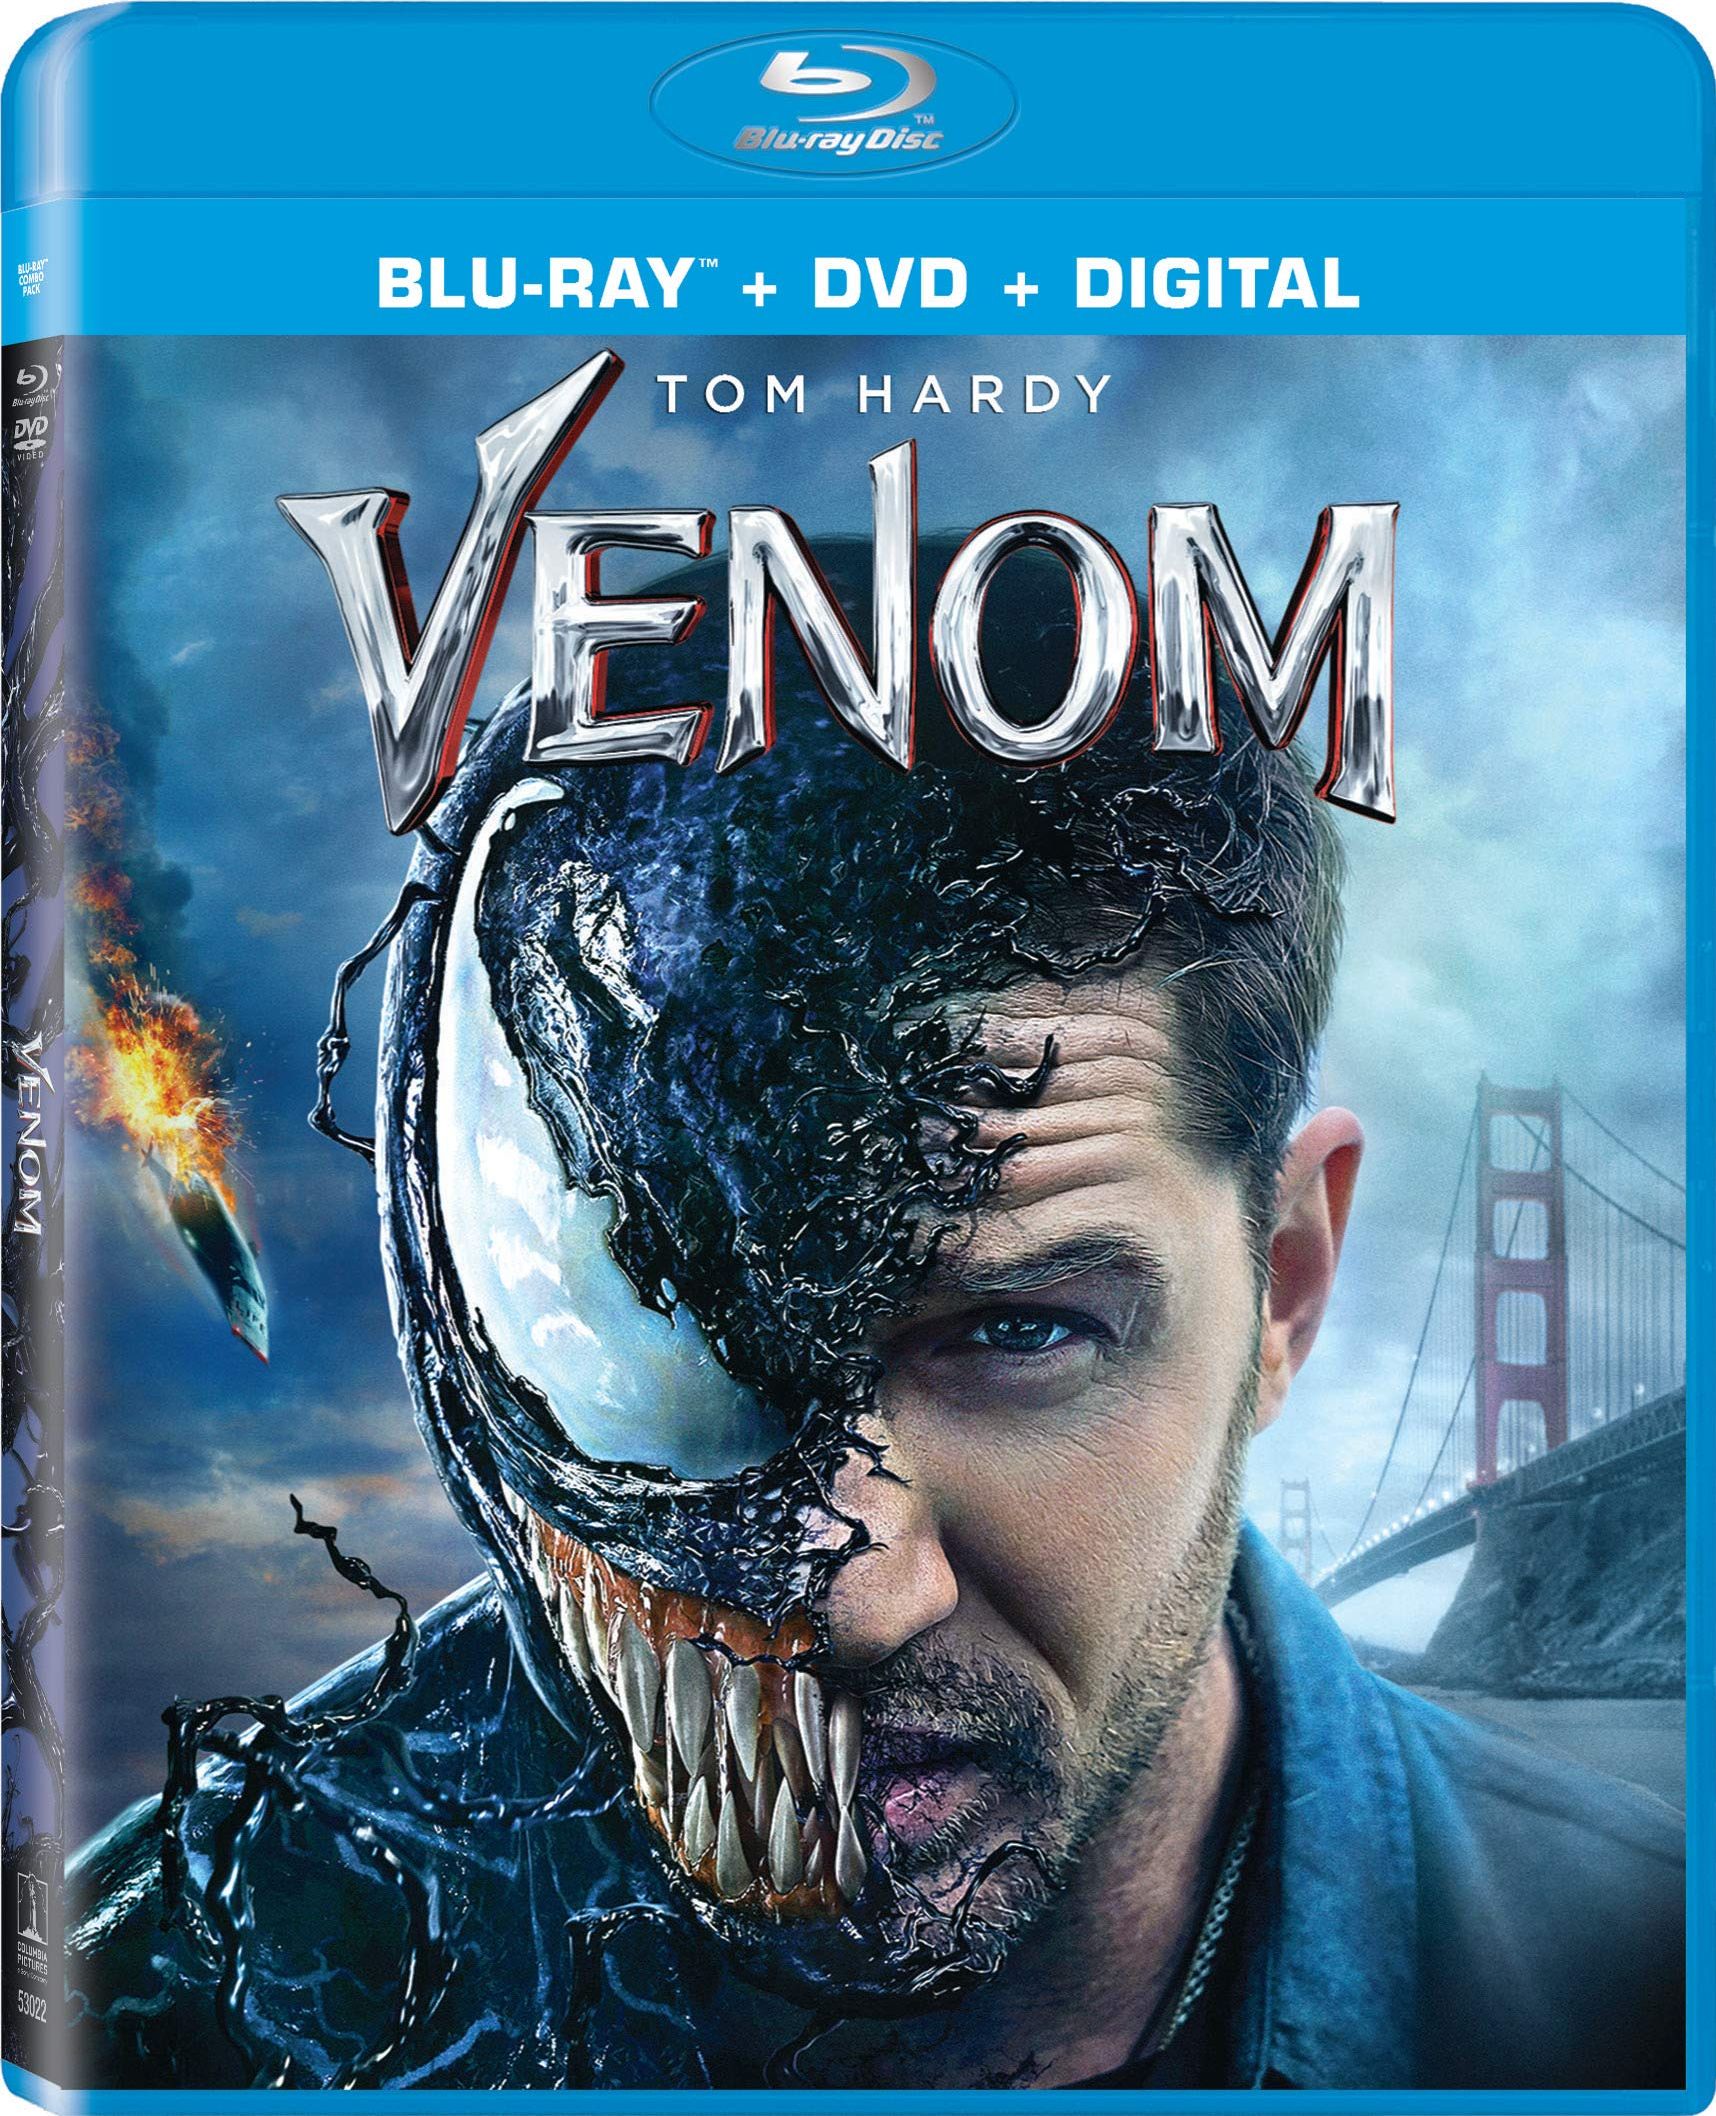 Venom DVD Release Date December 18, 2018